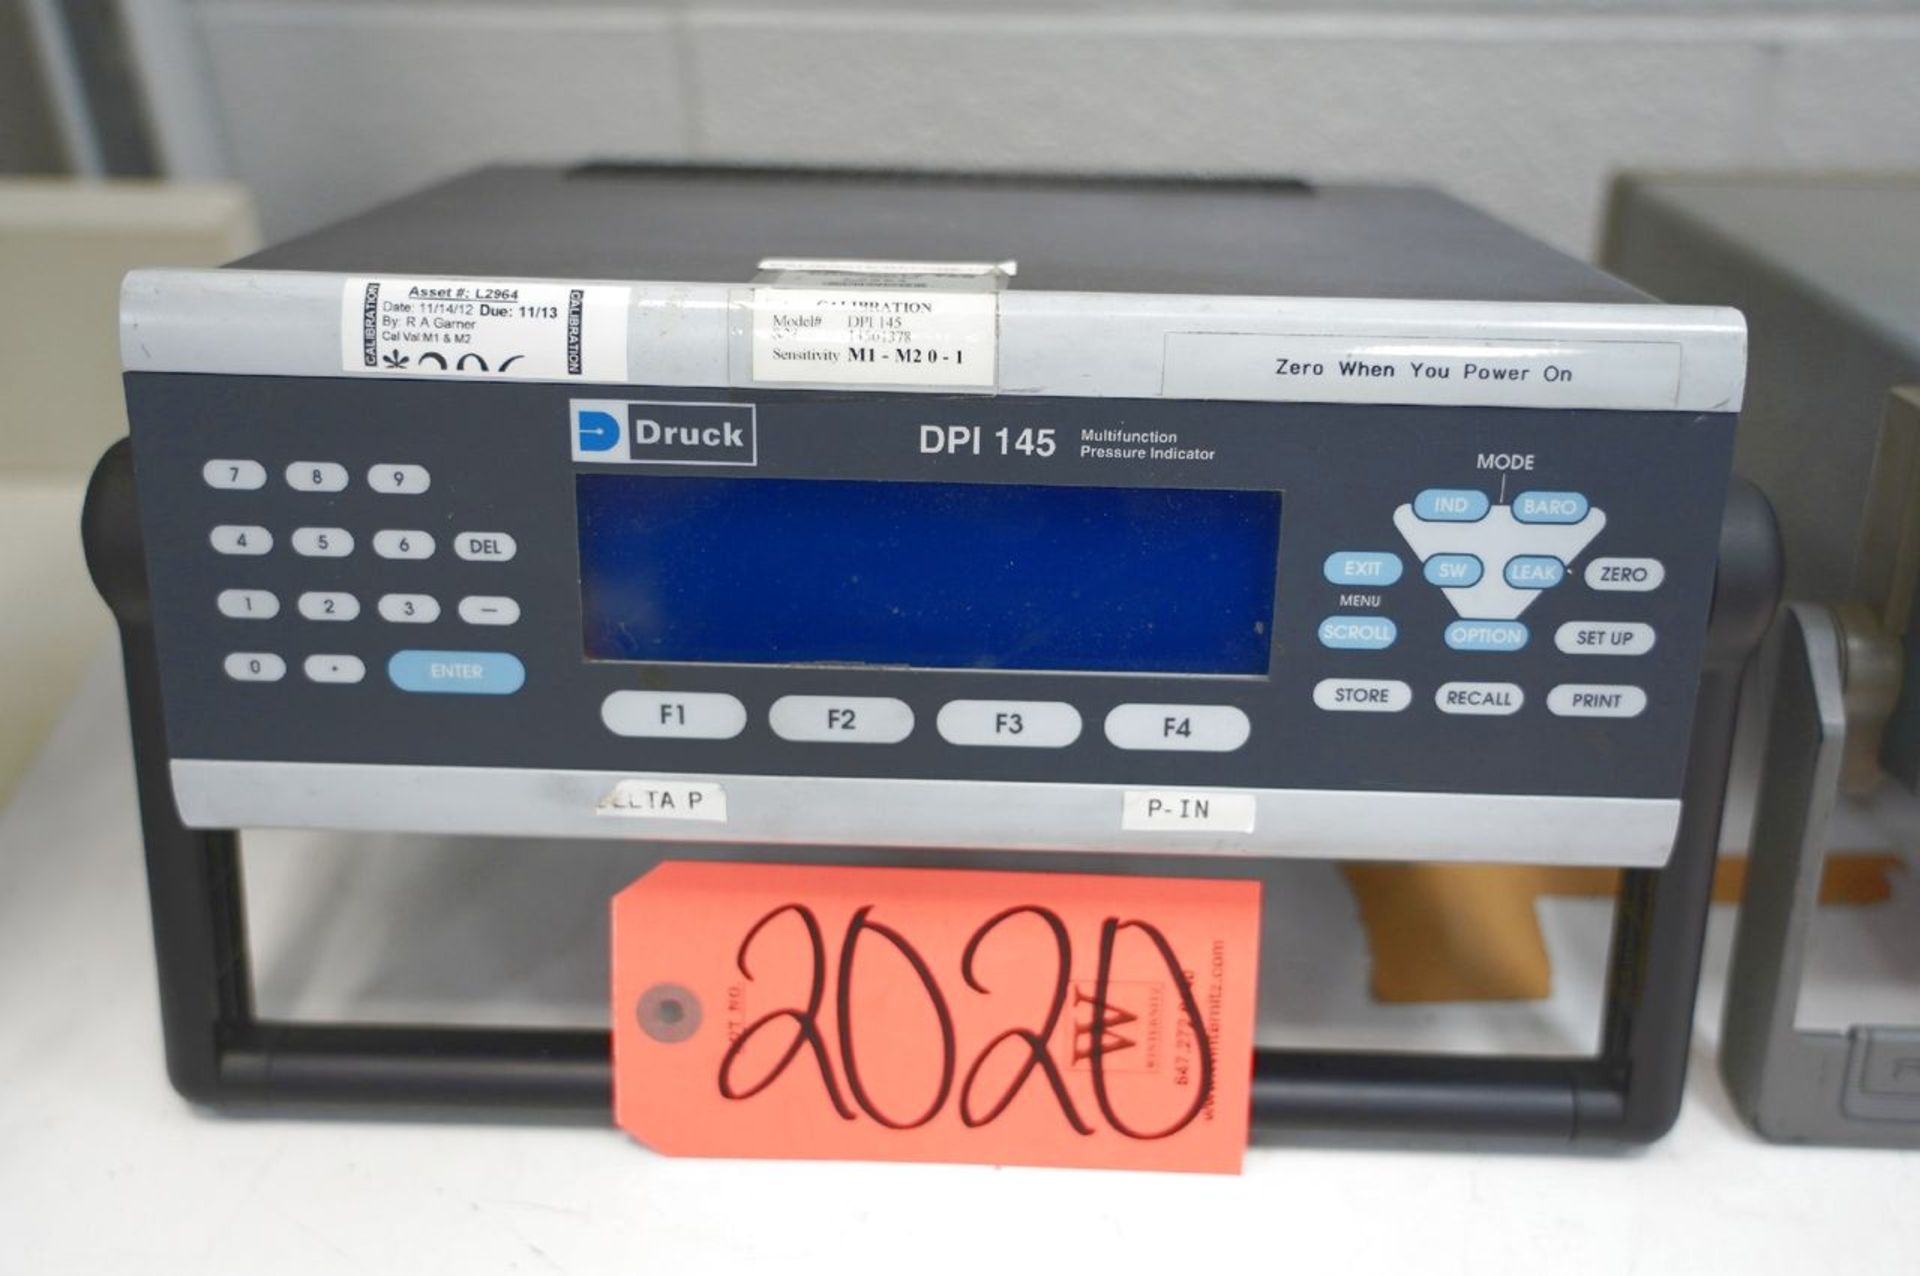 Druck DPI 145 Multifunction Pressure Indicator, Sensitivity M1-M2 0-1, S/N 14501378 (Instrumentation